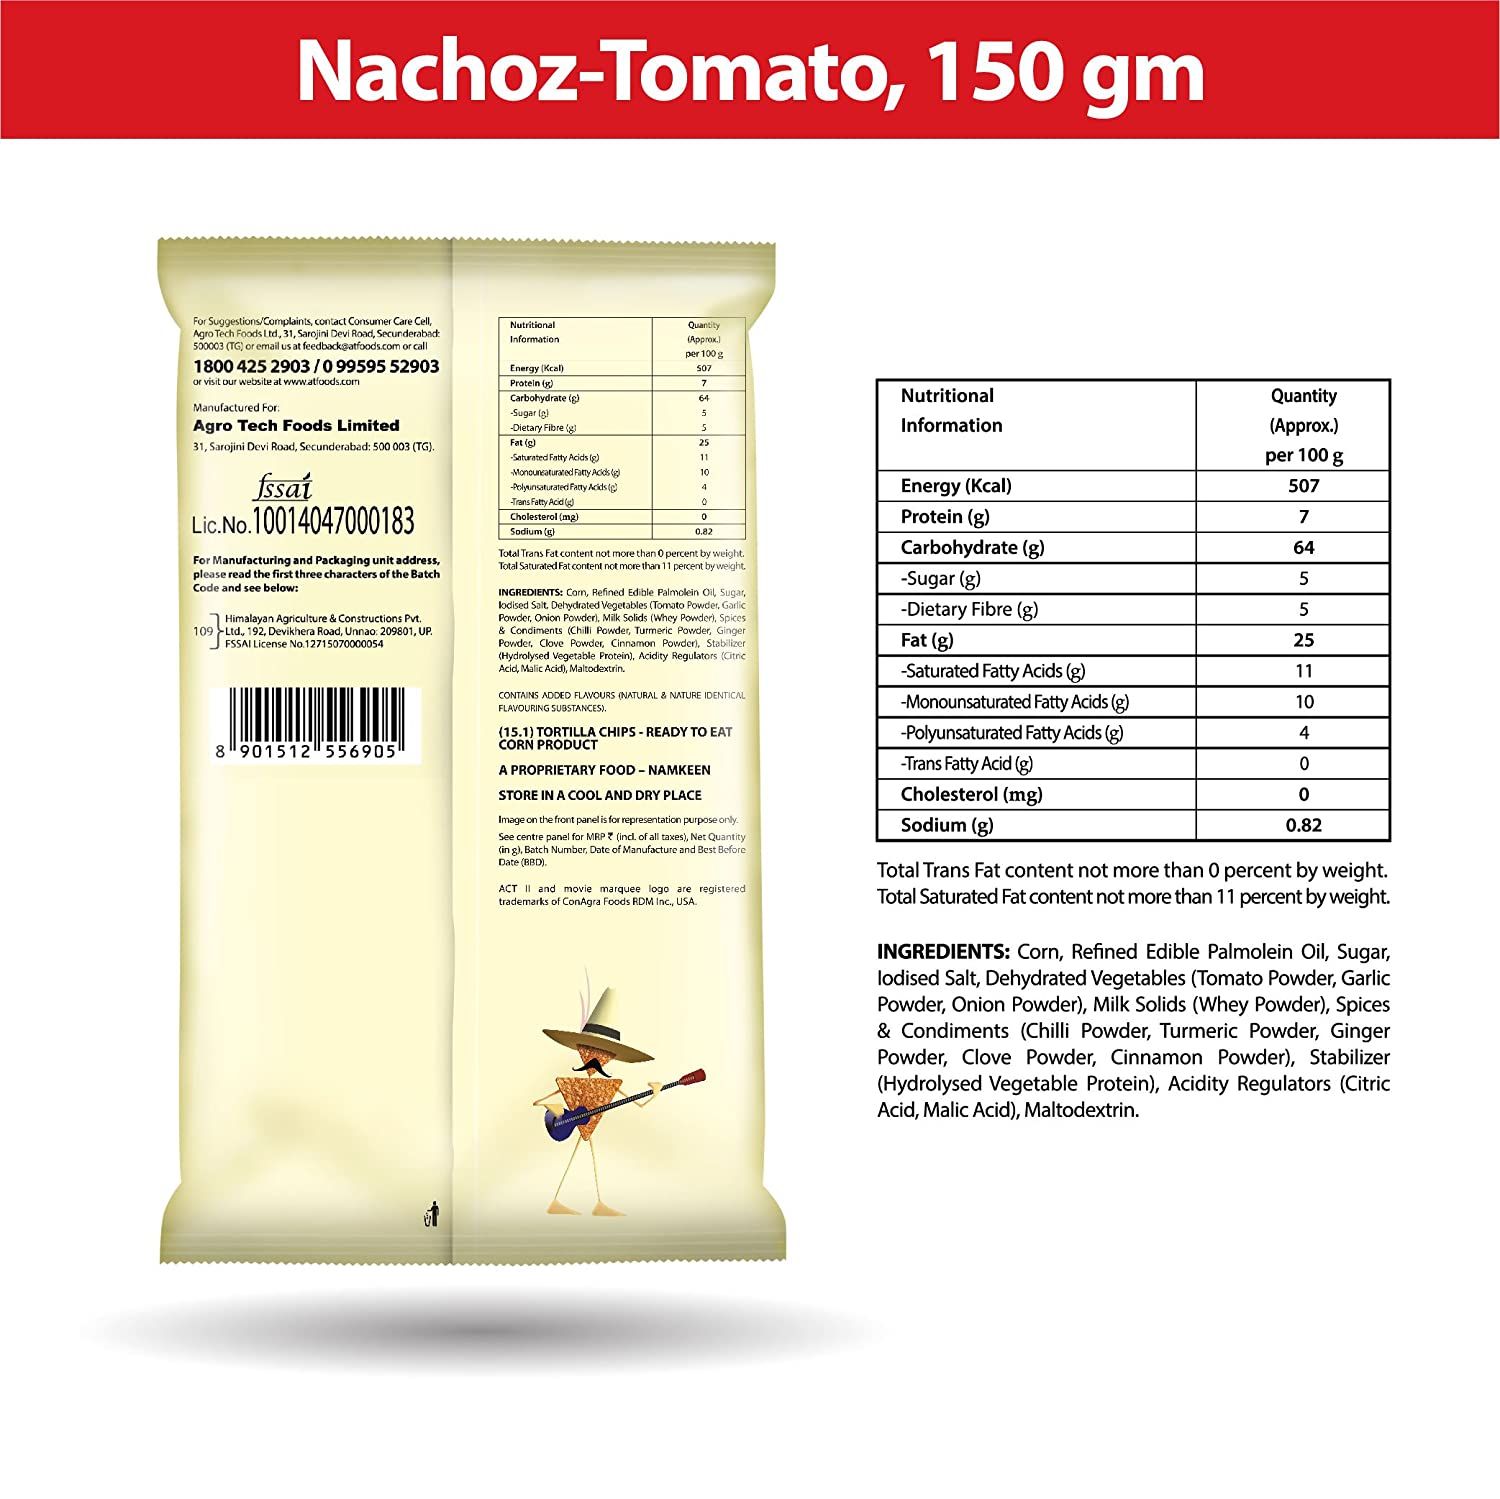 Act II Nachoz Tomato Image